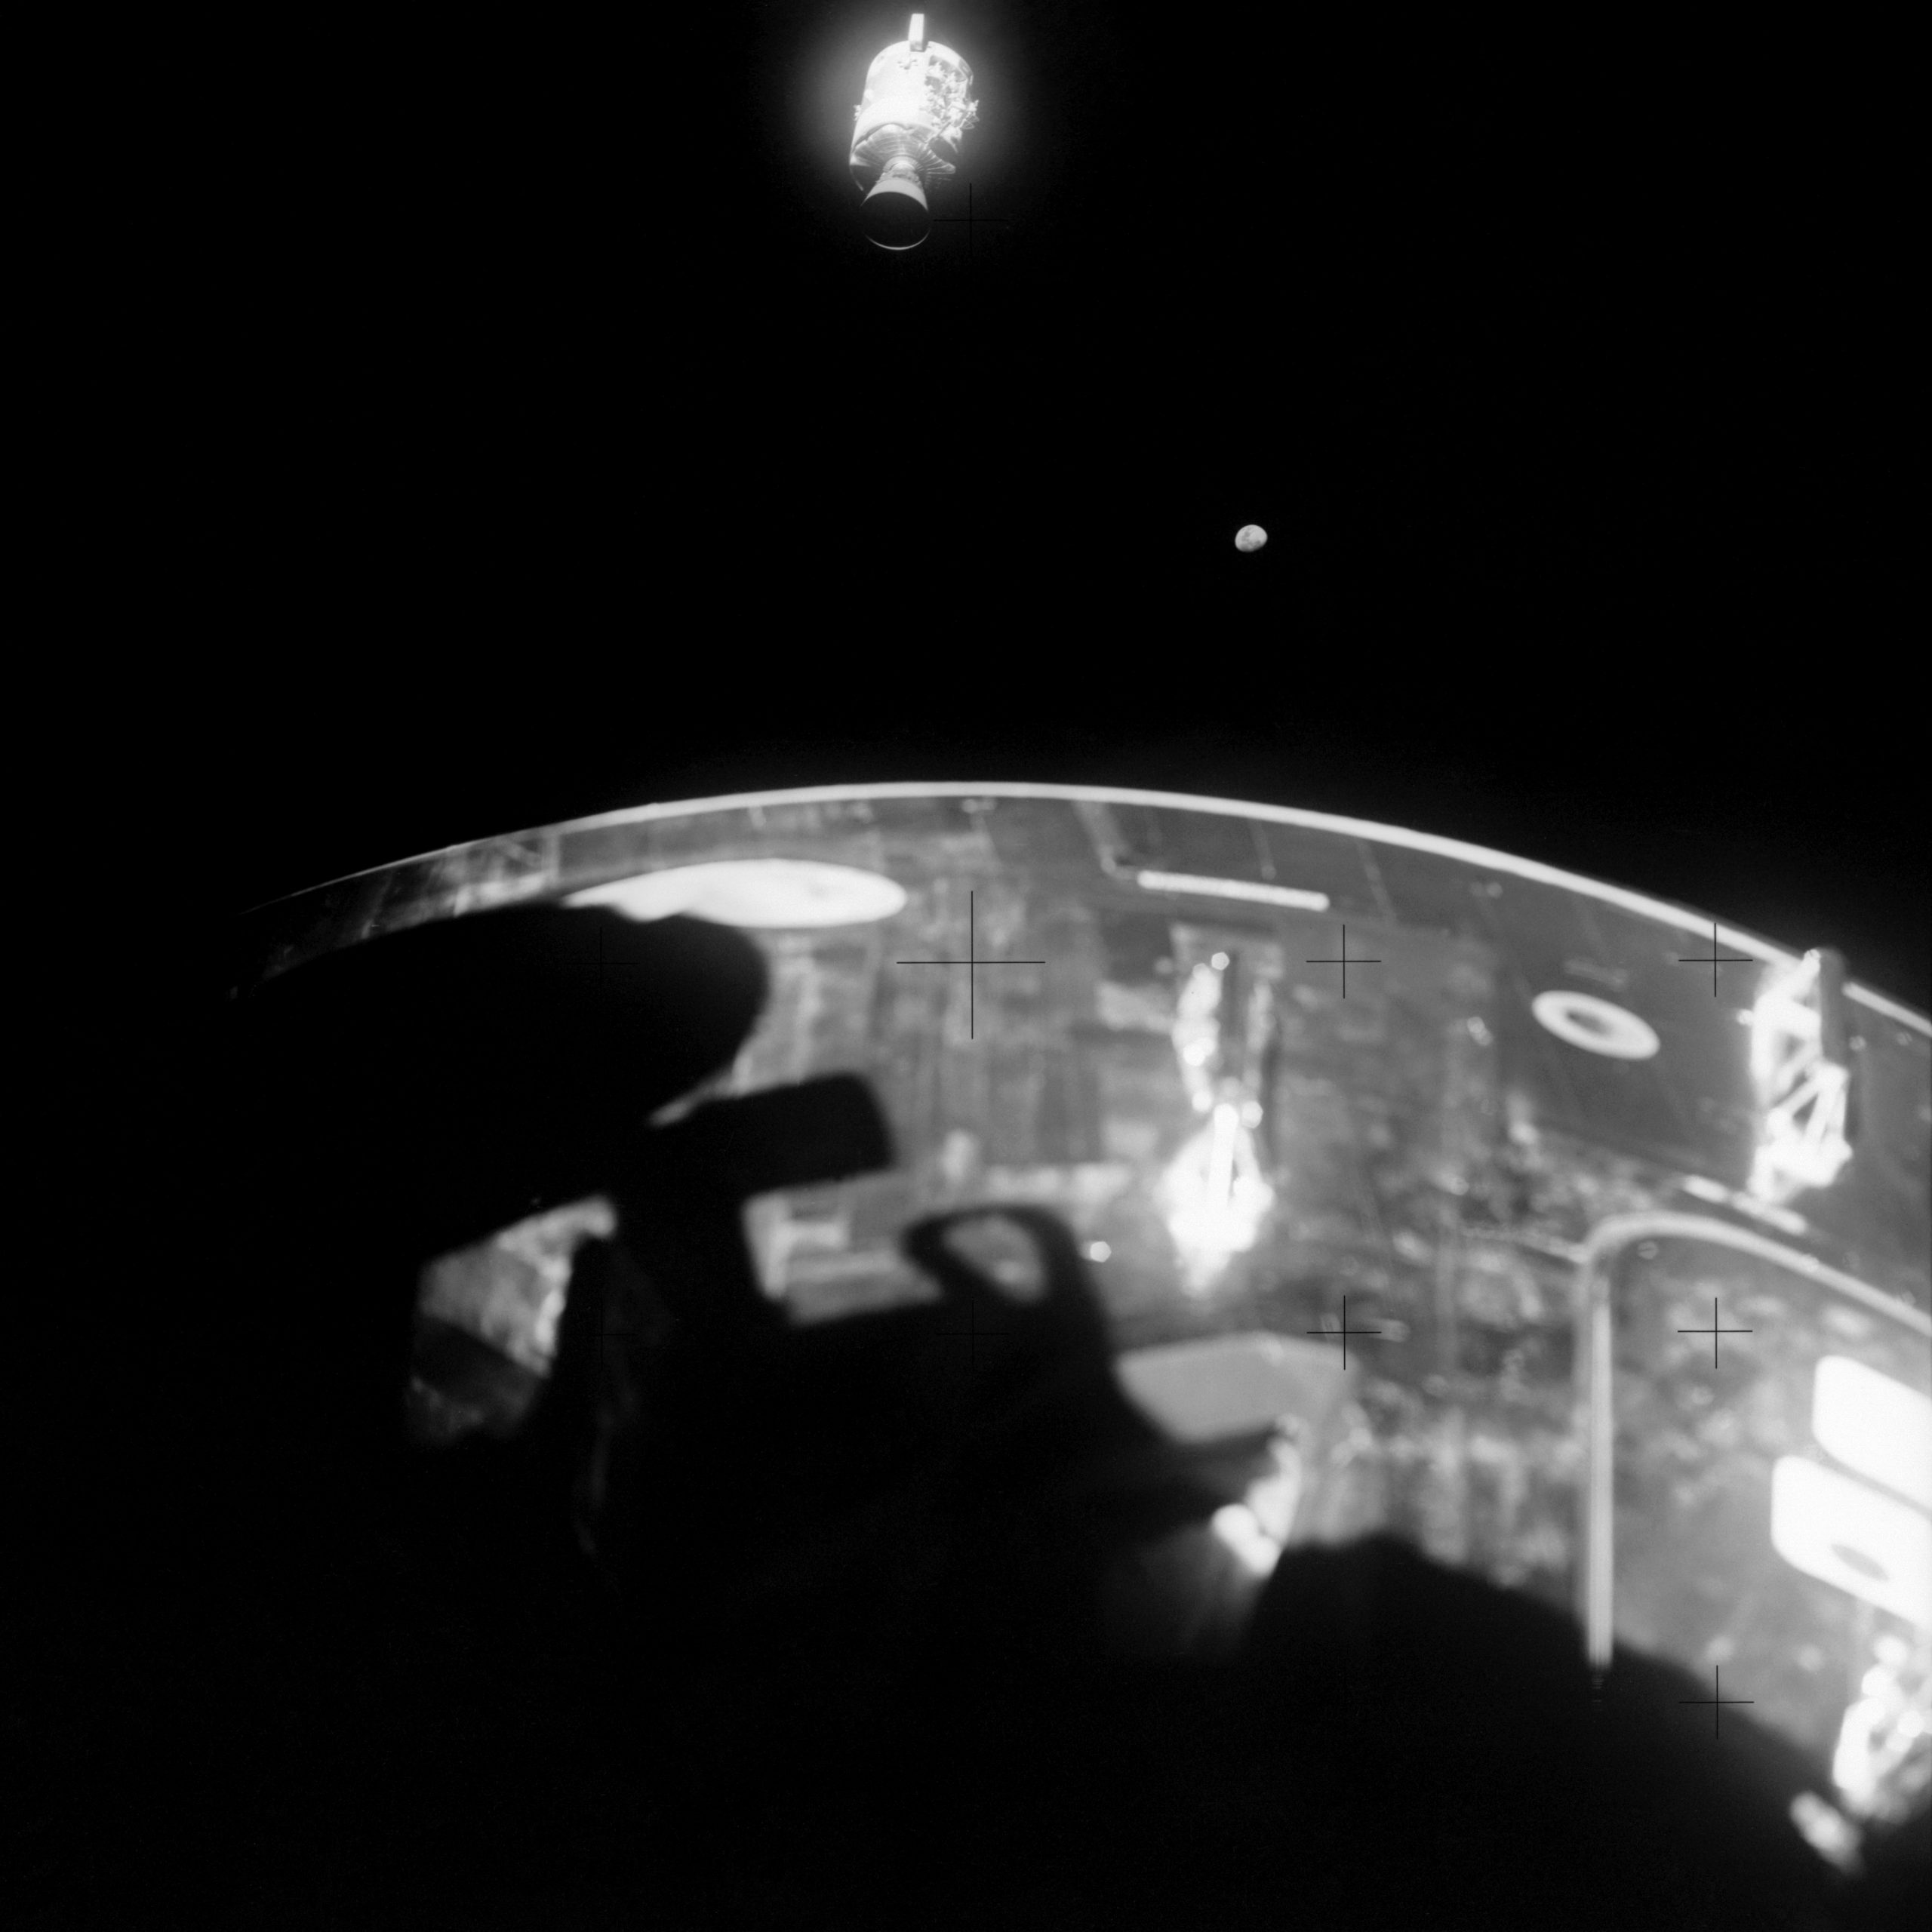 View of damaged Apollo 13 service module